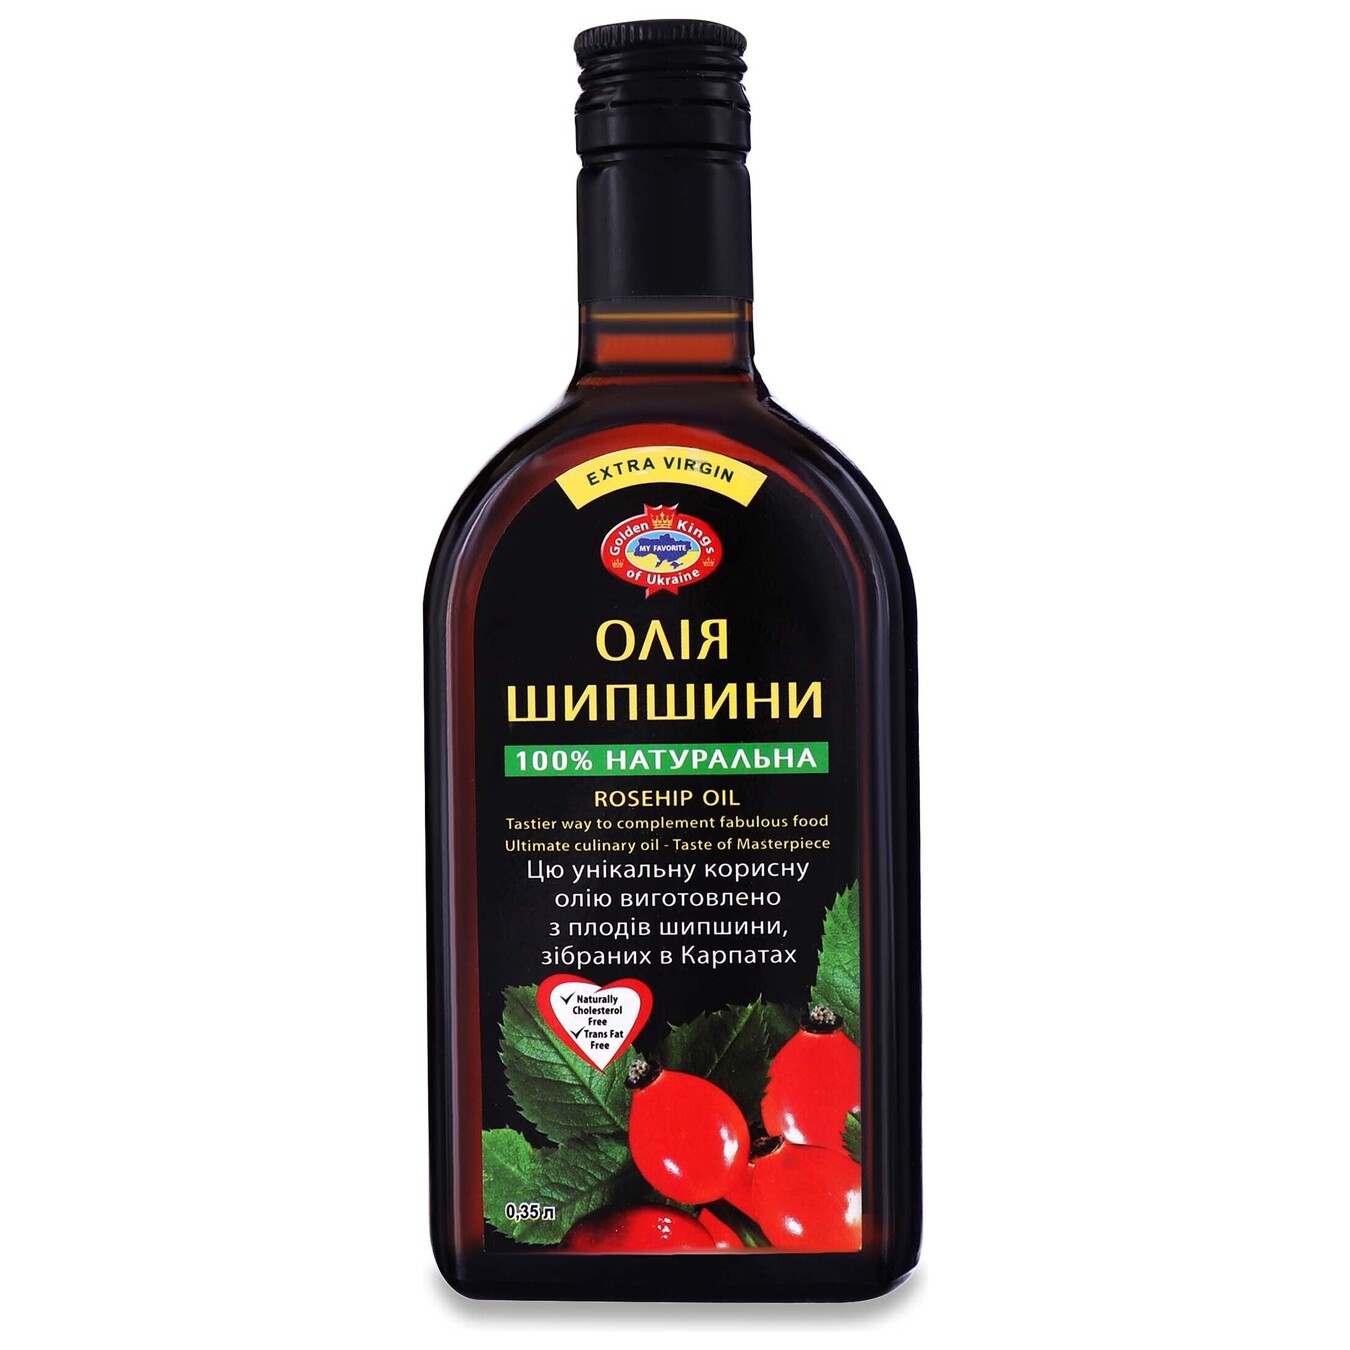 Golden Kings of Ukraine rose hip oil, unrefined, cold pressed, first pressed, 0.35 l